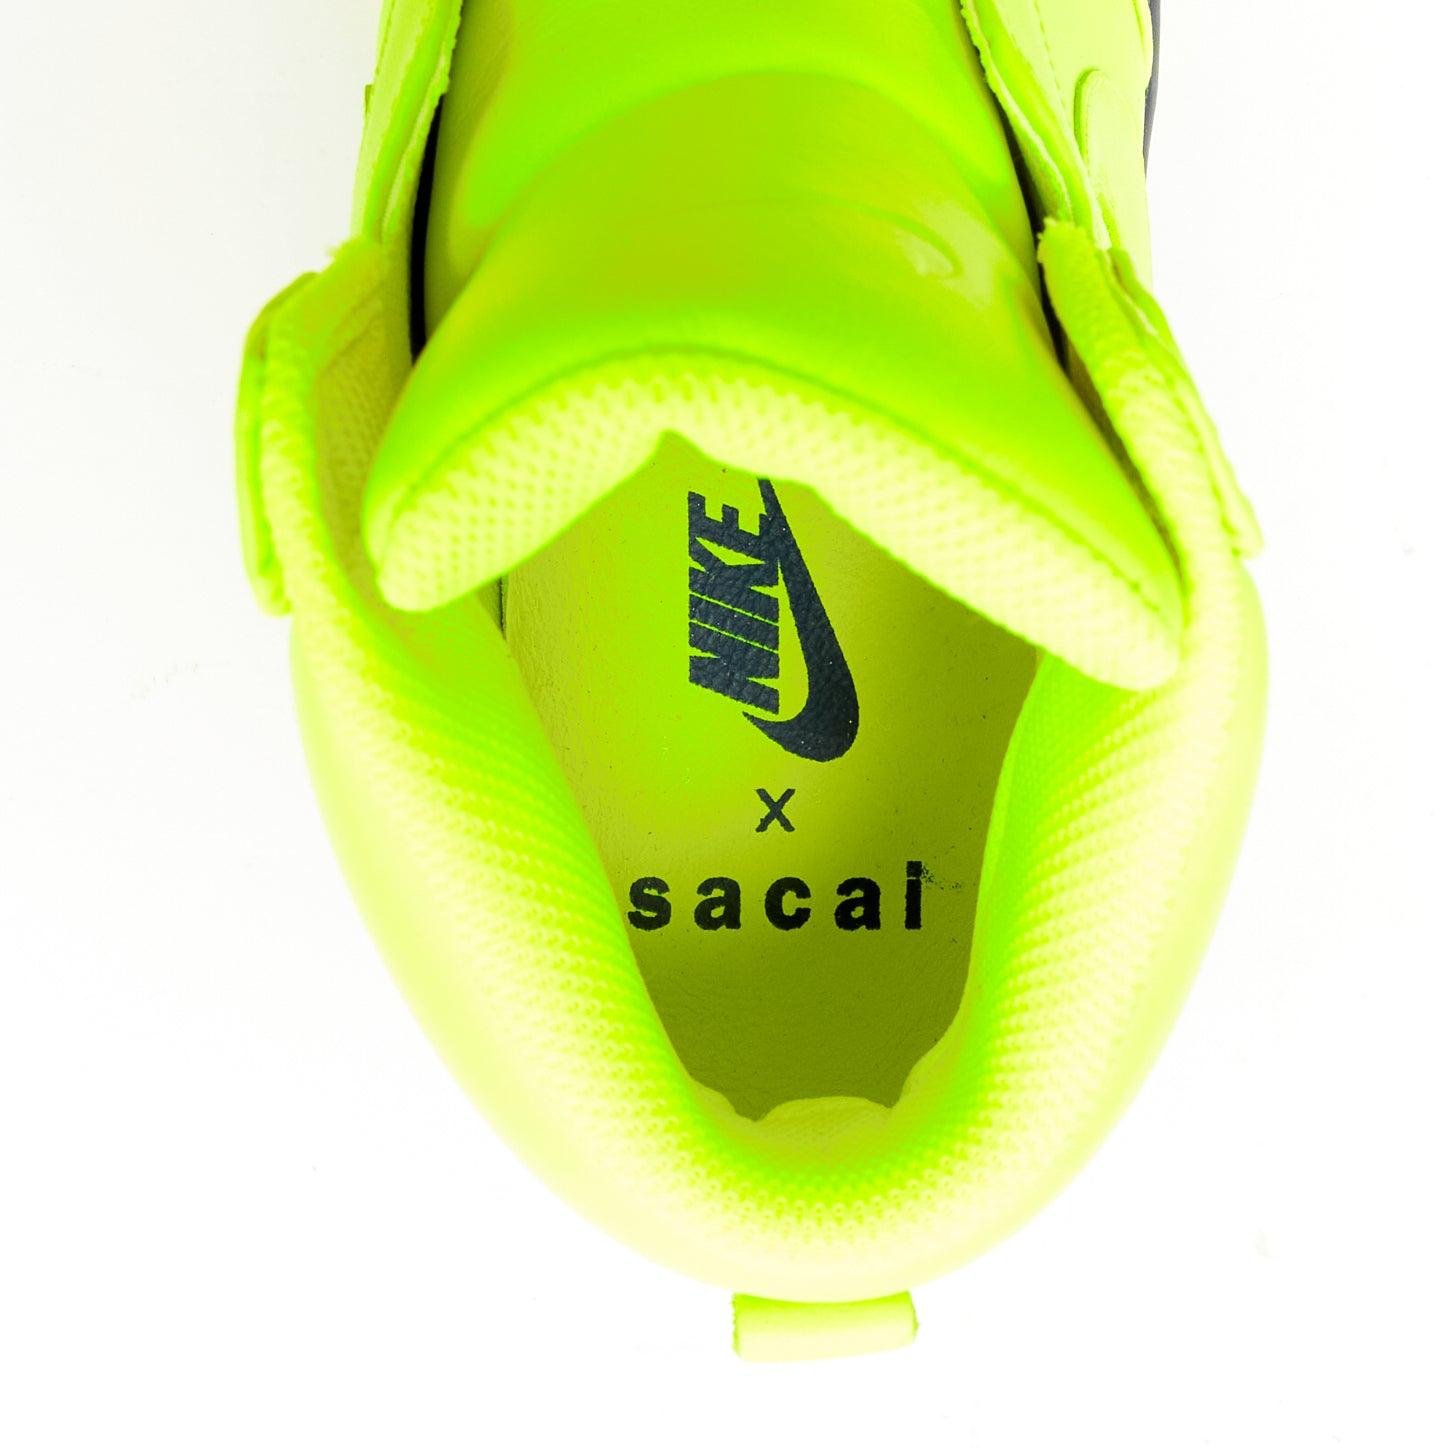 SACAI NIKE NIKELAB Dunk Lux SP Volt neon yellow high top sneakers US8 EU38 7